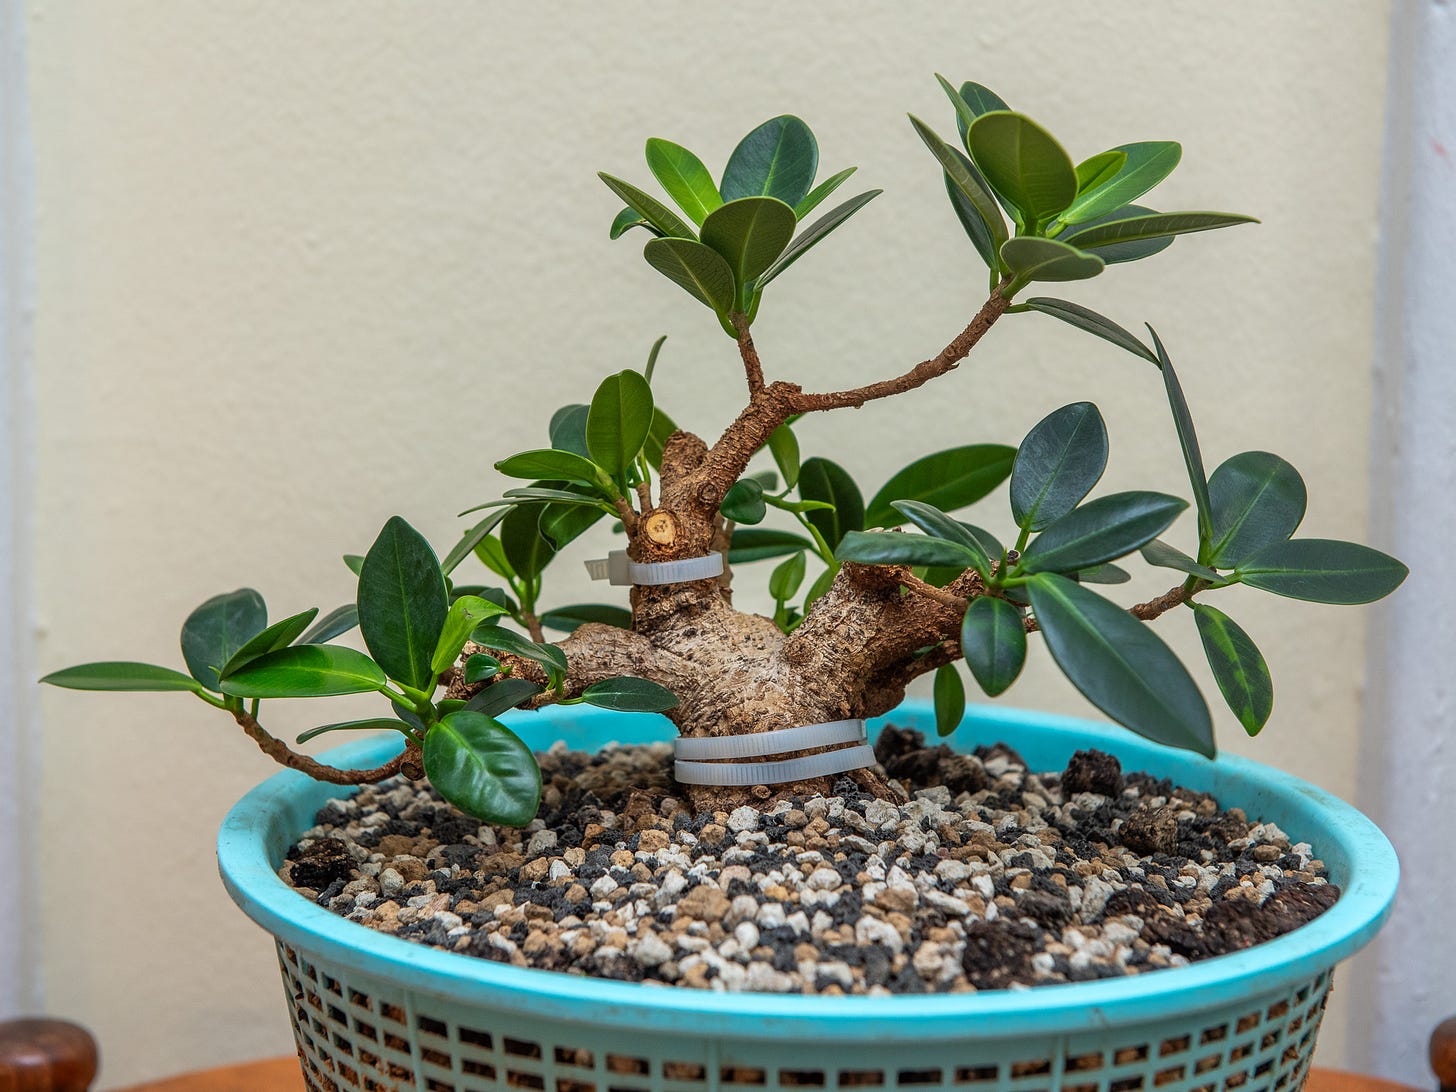 ID: Pruned ficus microcarpa bonsai